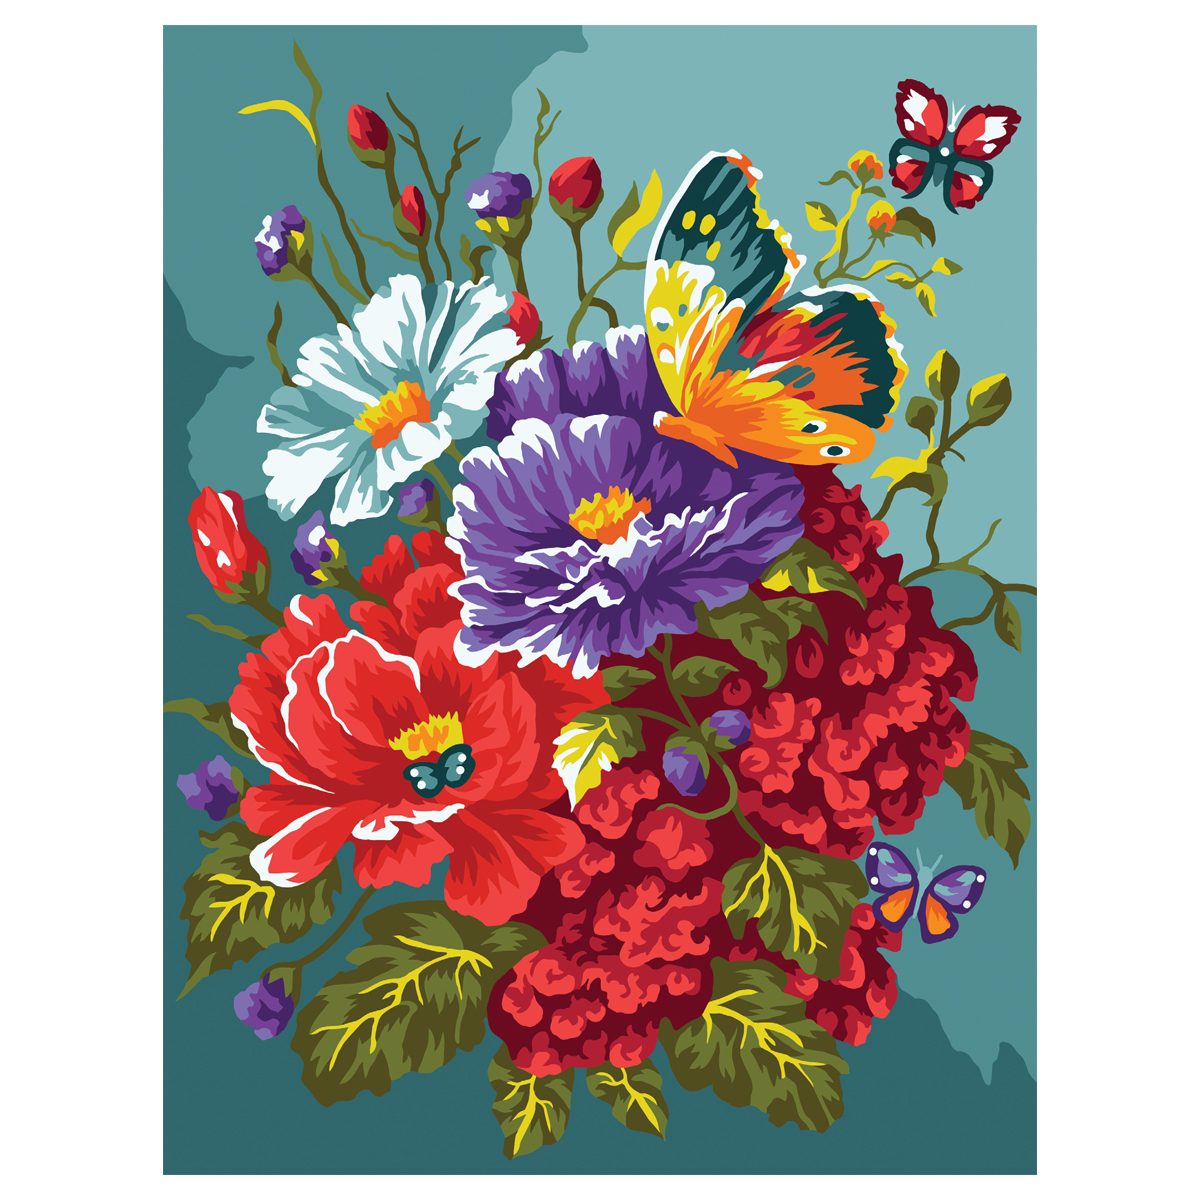 Картина по номерам на картоне ТРИ СОВЫ "Бабочка на цветах", 30*40, с акриловыми красками и кистями